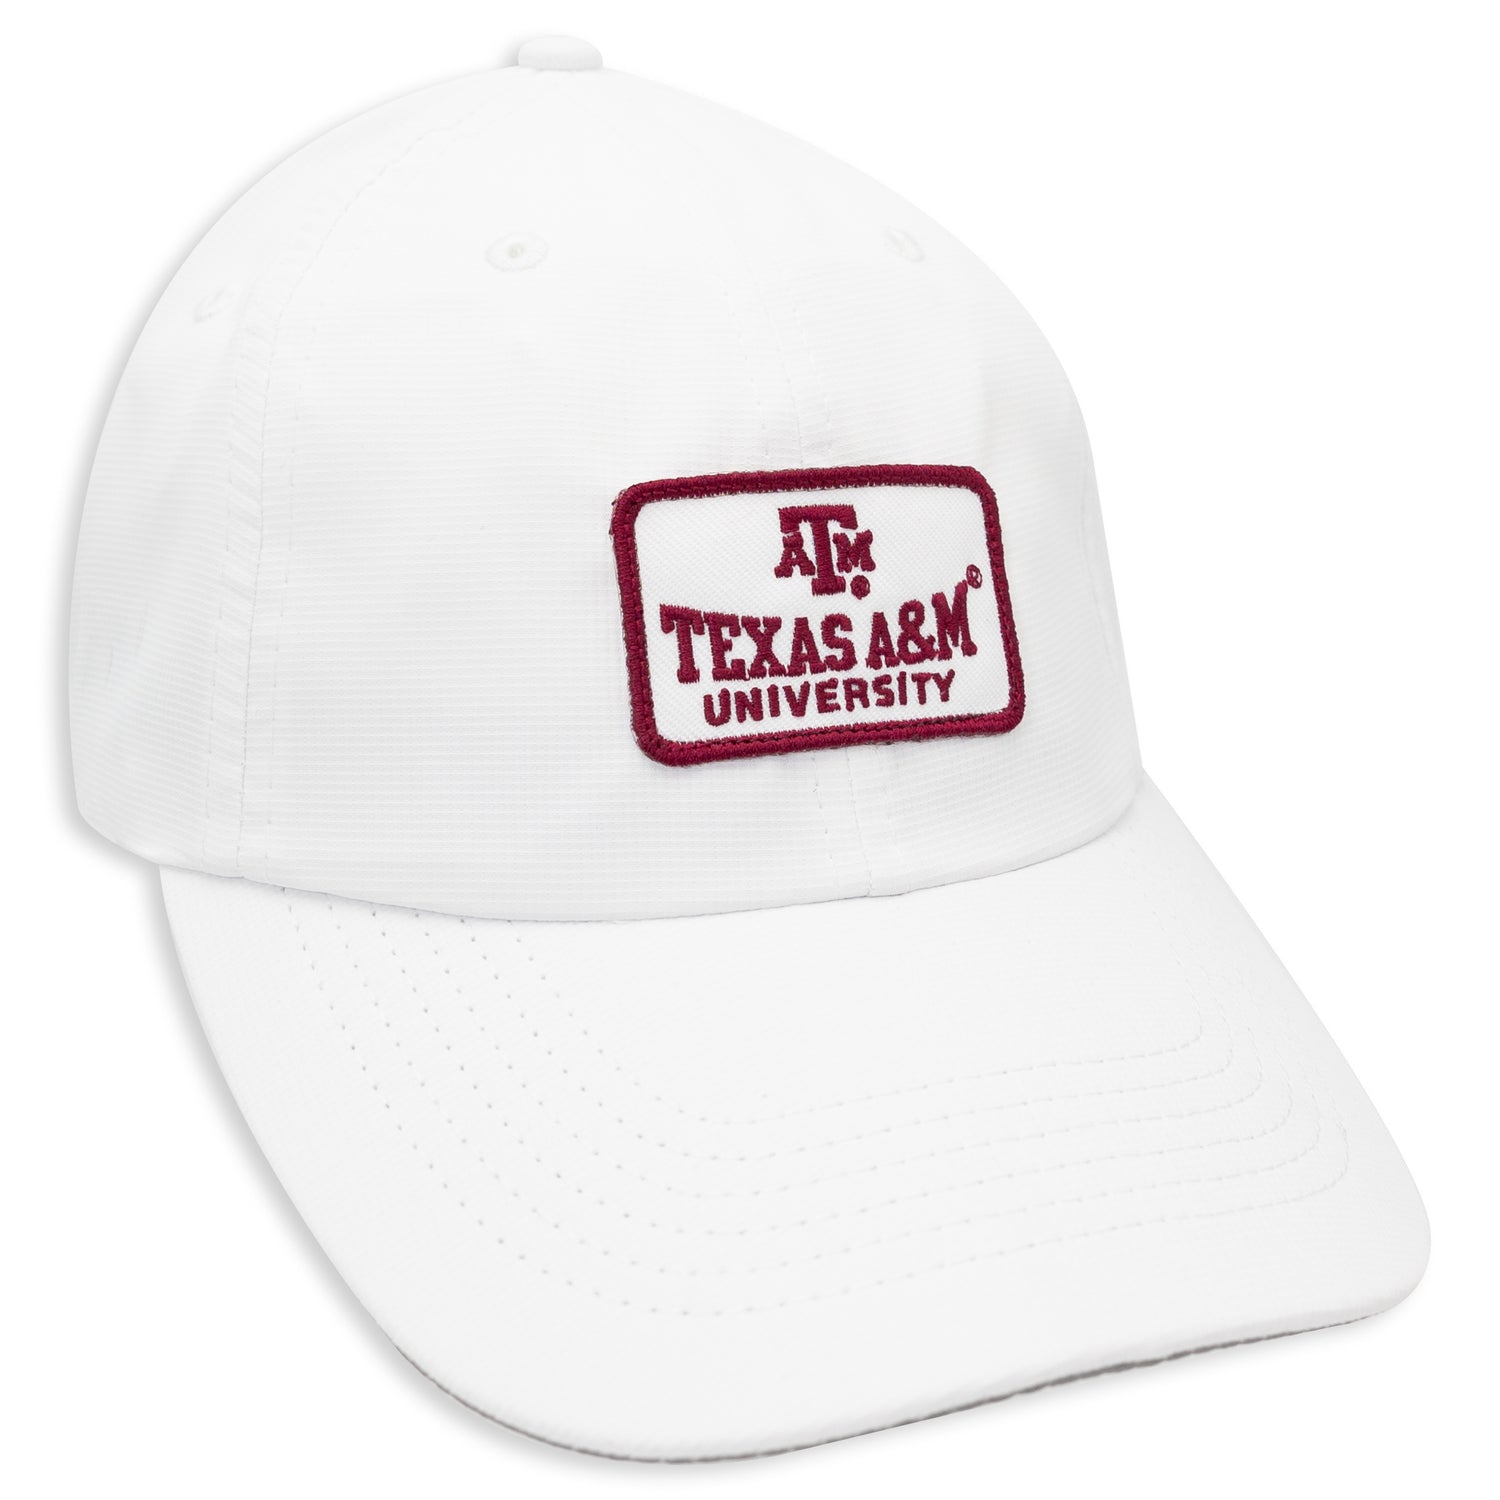 Texas A&M University Patch White Hat